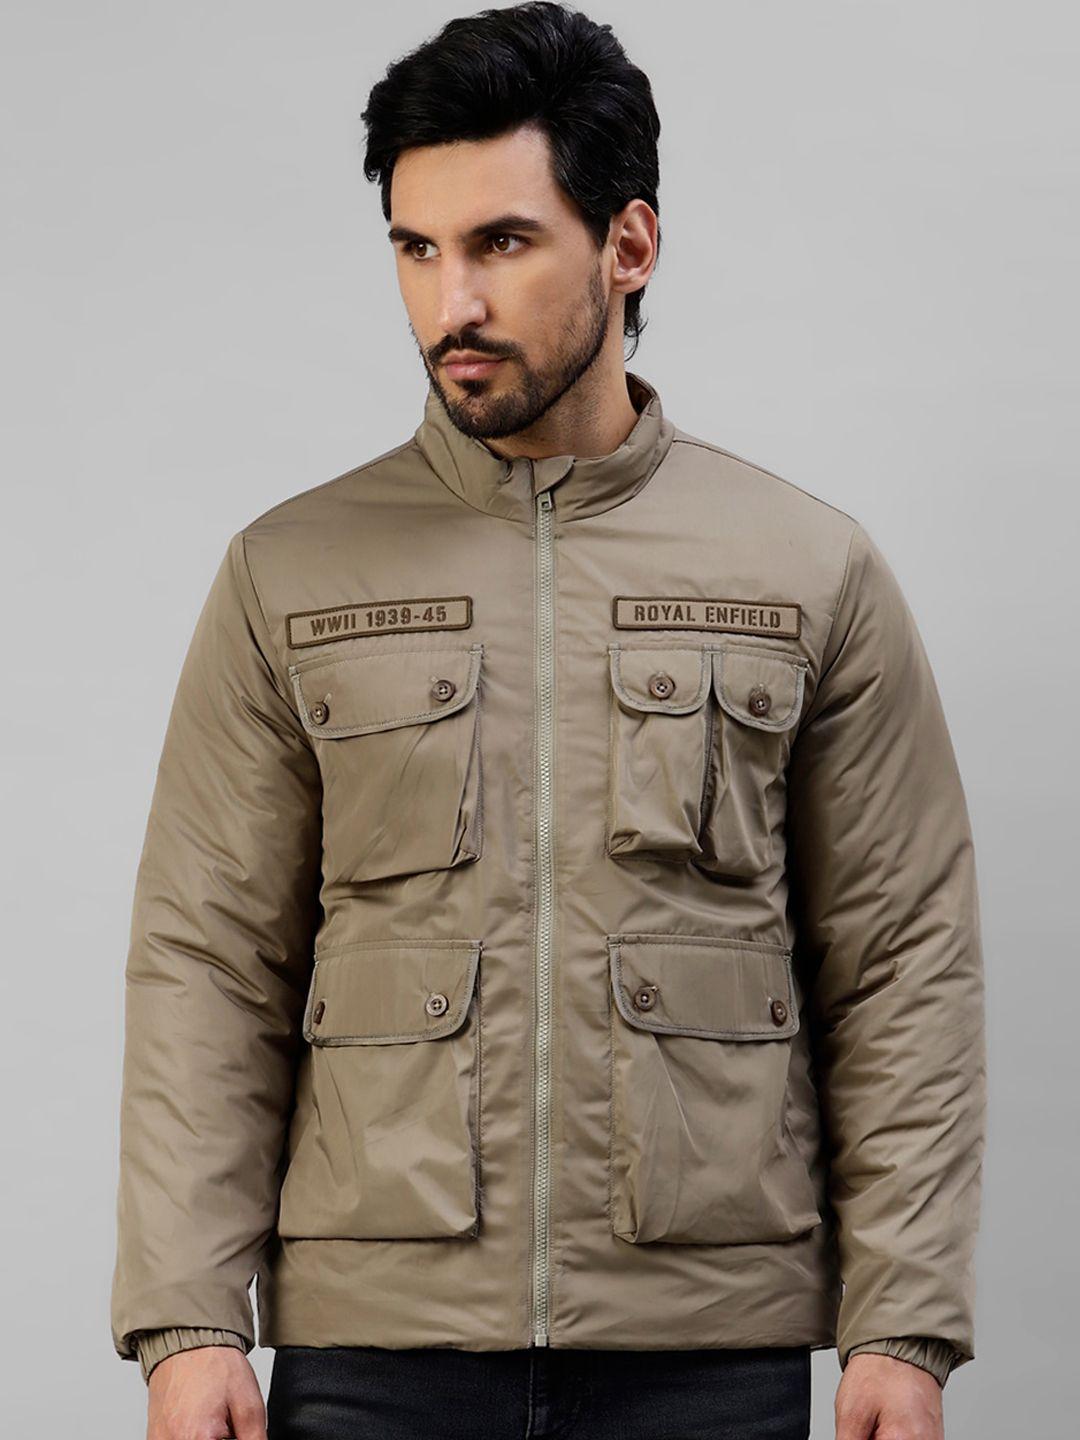 royal-enfield-airborne-padded-jacket